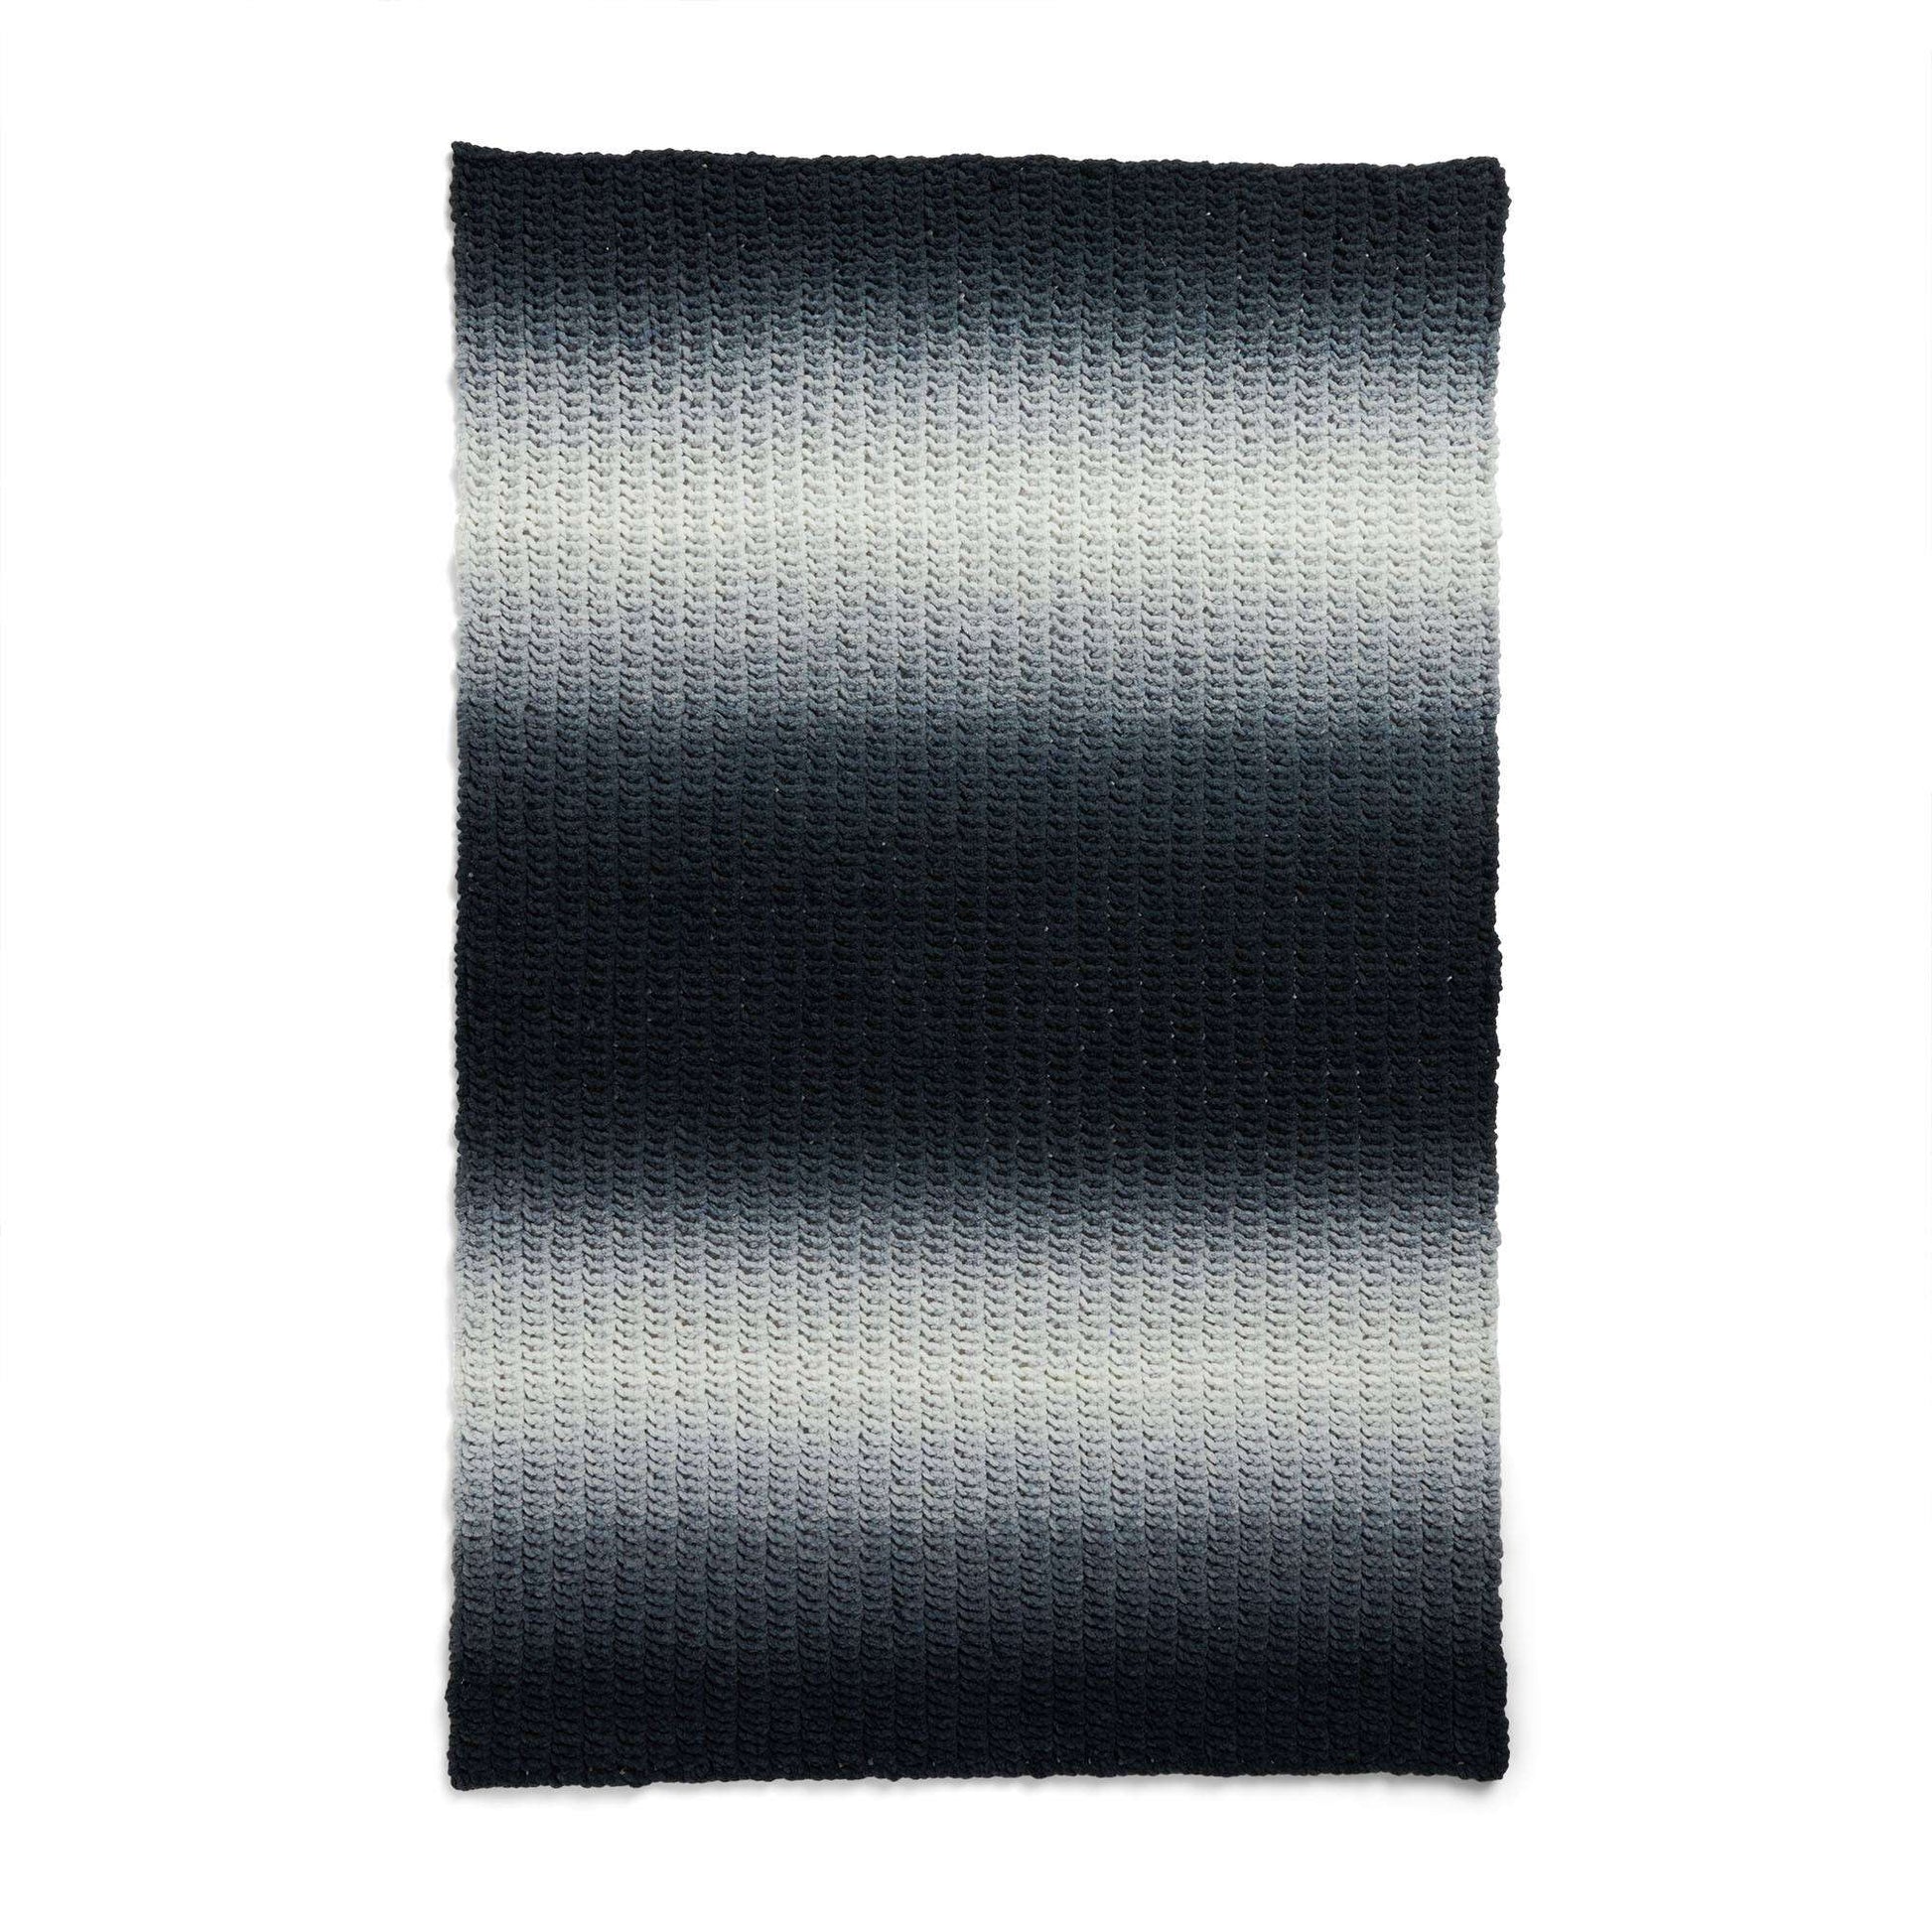 Free Bernat Blink Of An Eyelet Knit Blanket Pattern